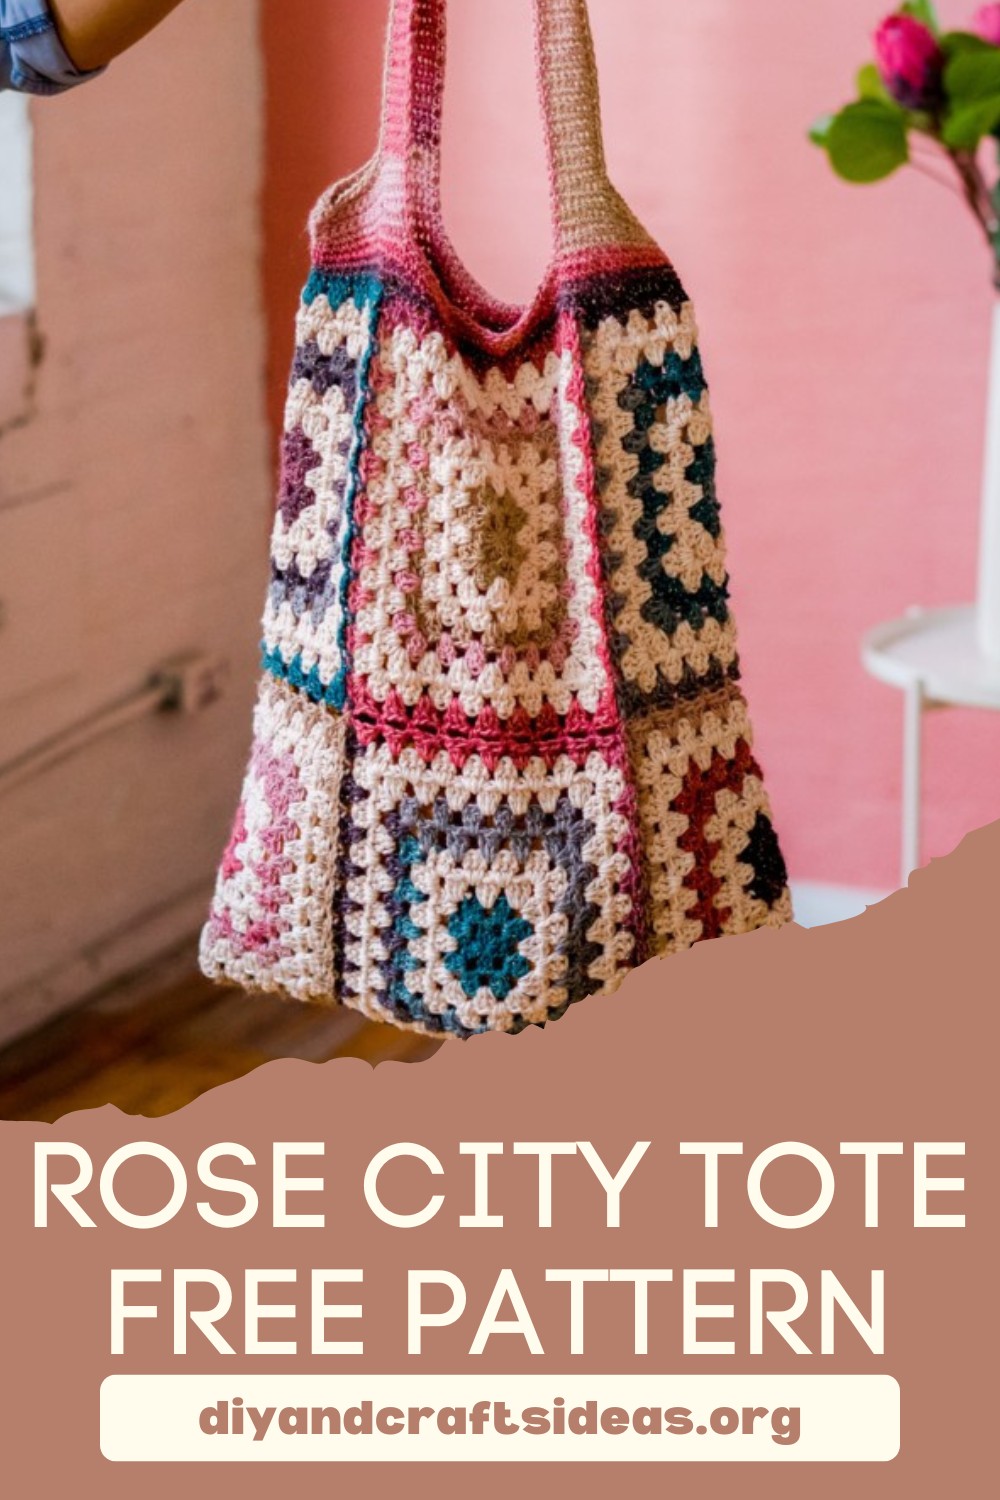 Rose City Tote Free Pattern